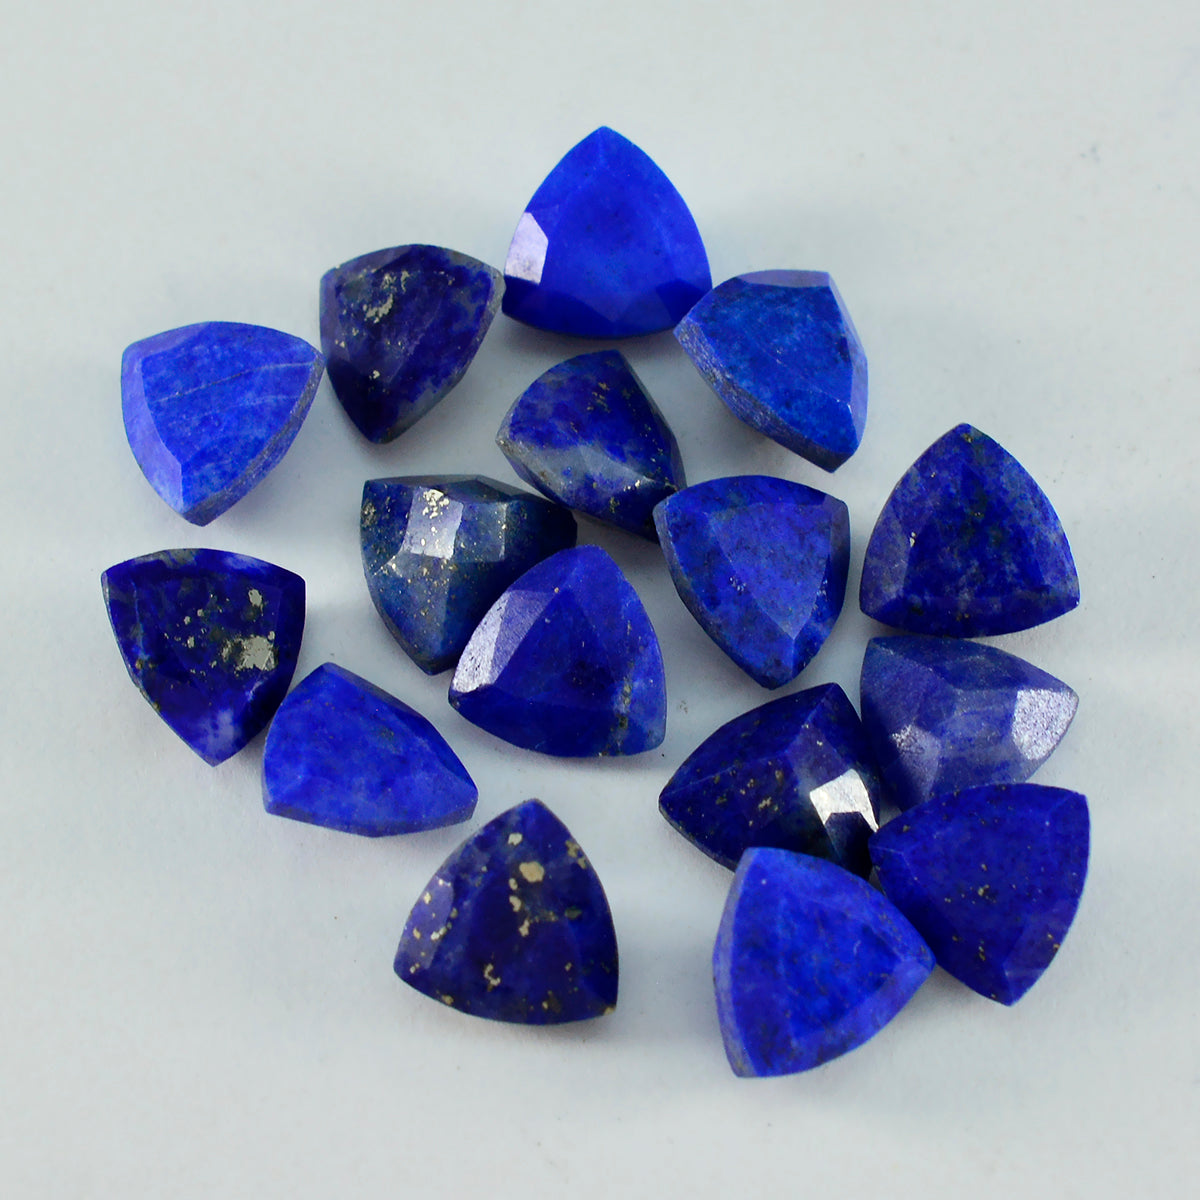 riyogems 1pc vero lapislazzuli blu sfaccettato 6x6 mm forma trilione gemma sciolta di qualità eccezionale